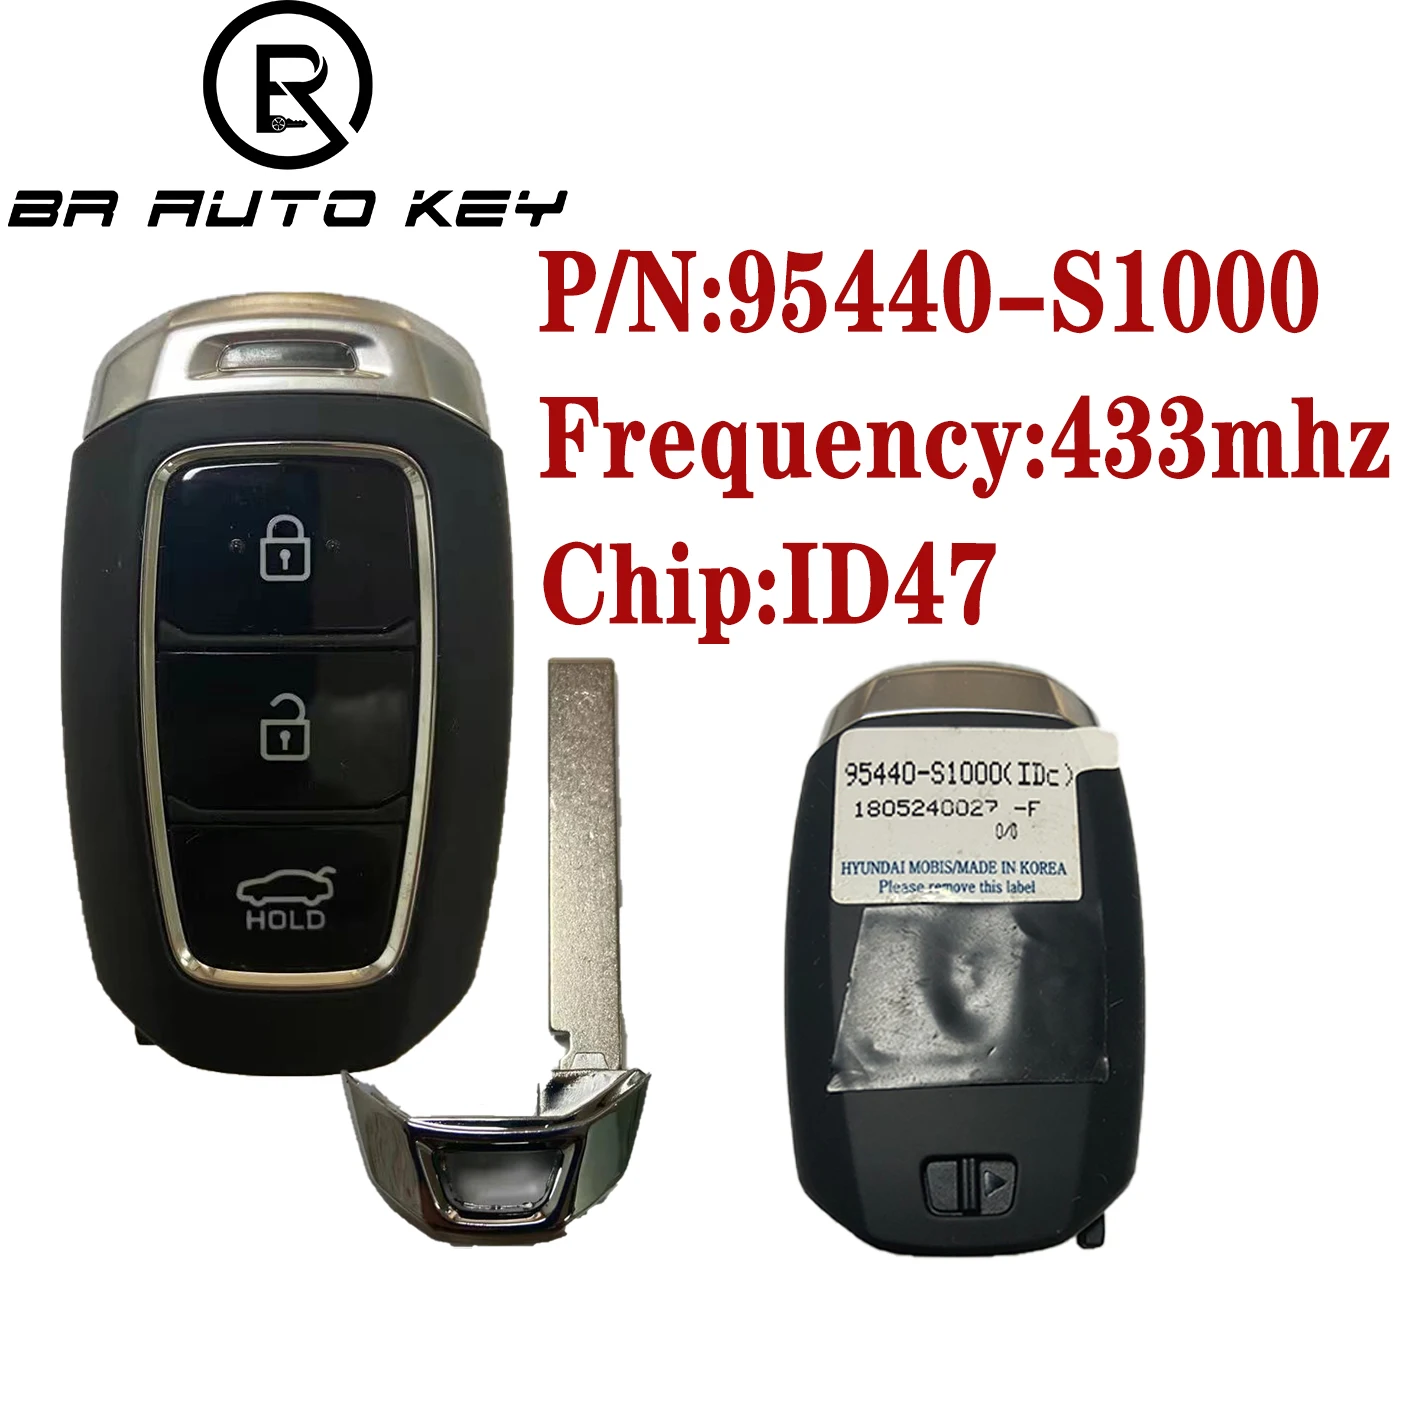 

Oem Genuine Smart Key 95440-S1000 for Hyundai Santa Fe 2018 2019 2020 Original NCF29A1 HITAG 3 47 CHIP 95440-S1000 433.92Mhz FSK